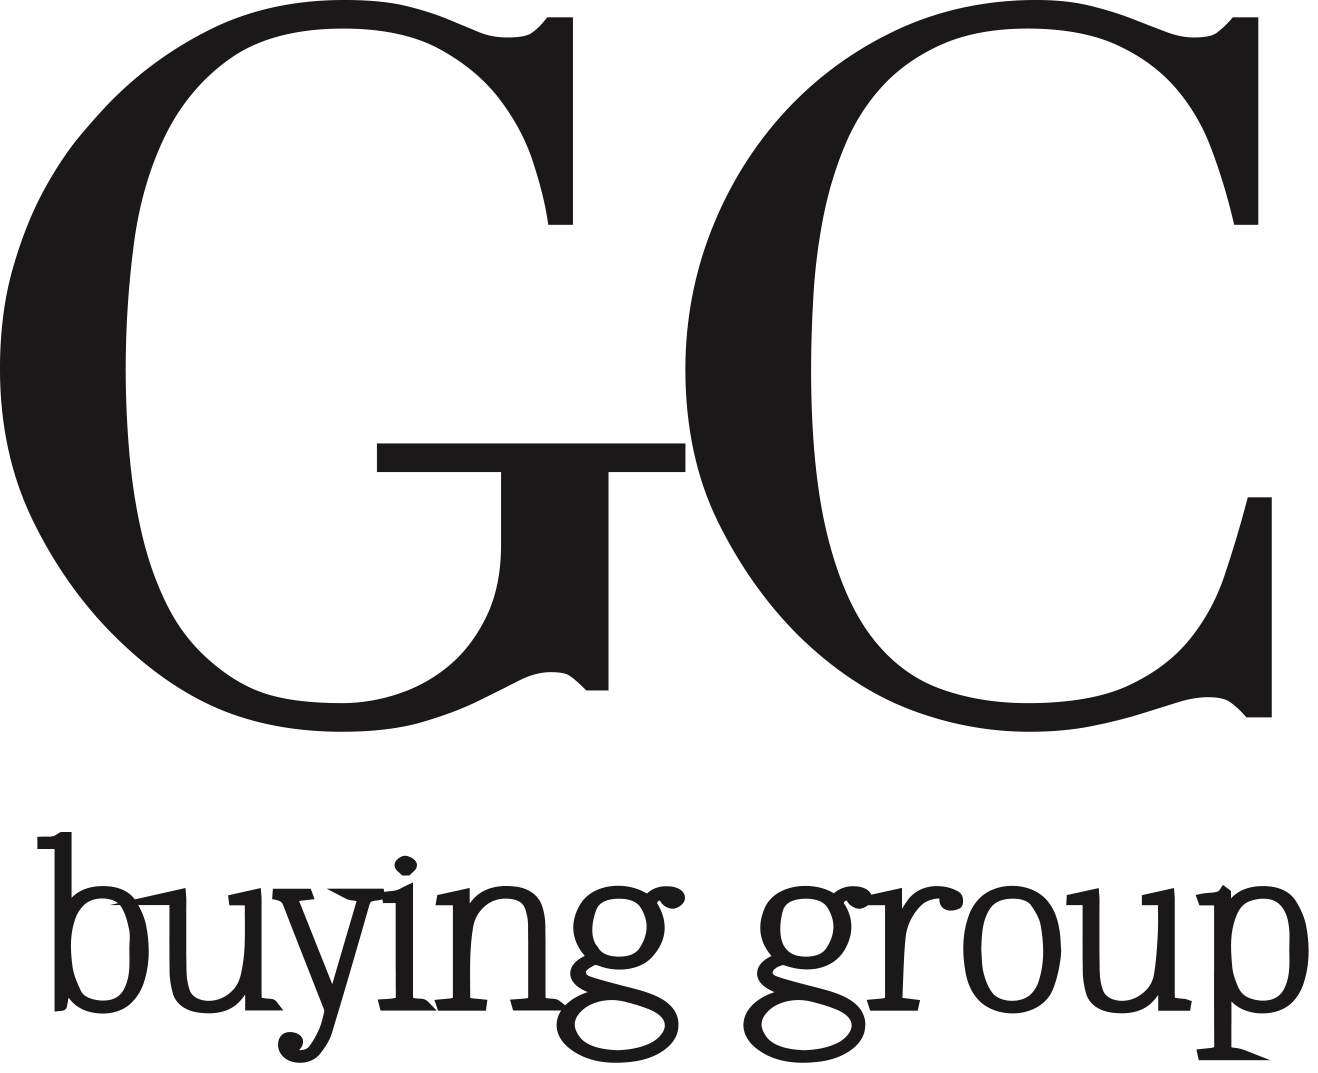 GC Buying Group Kicks off Member Conference at AmericasMart